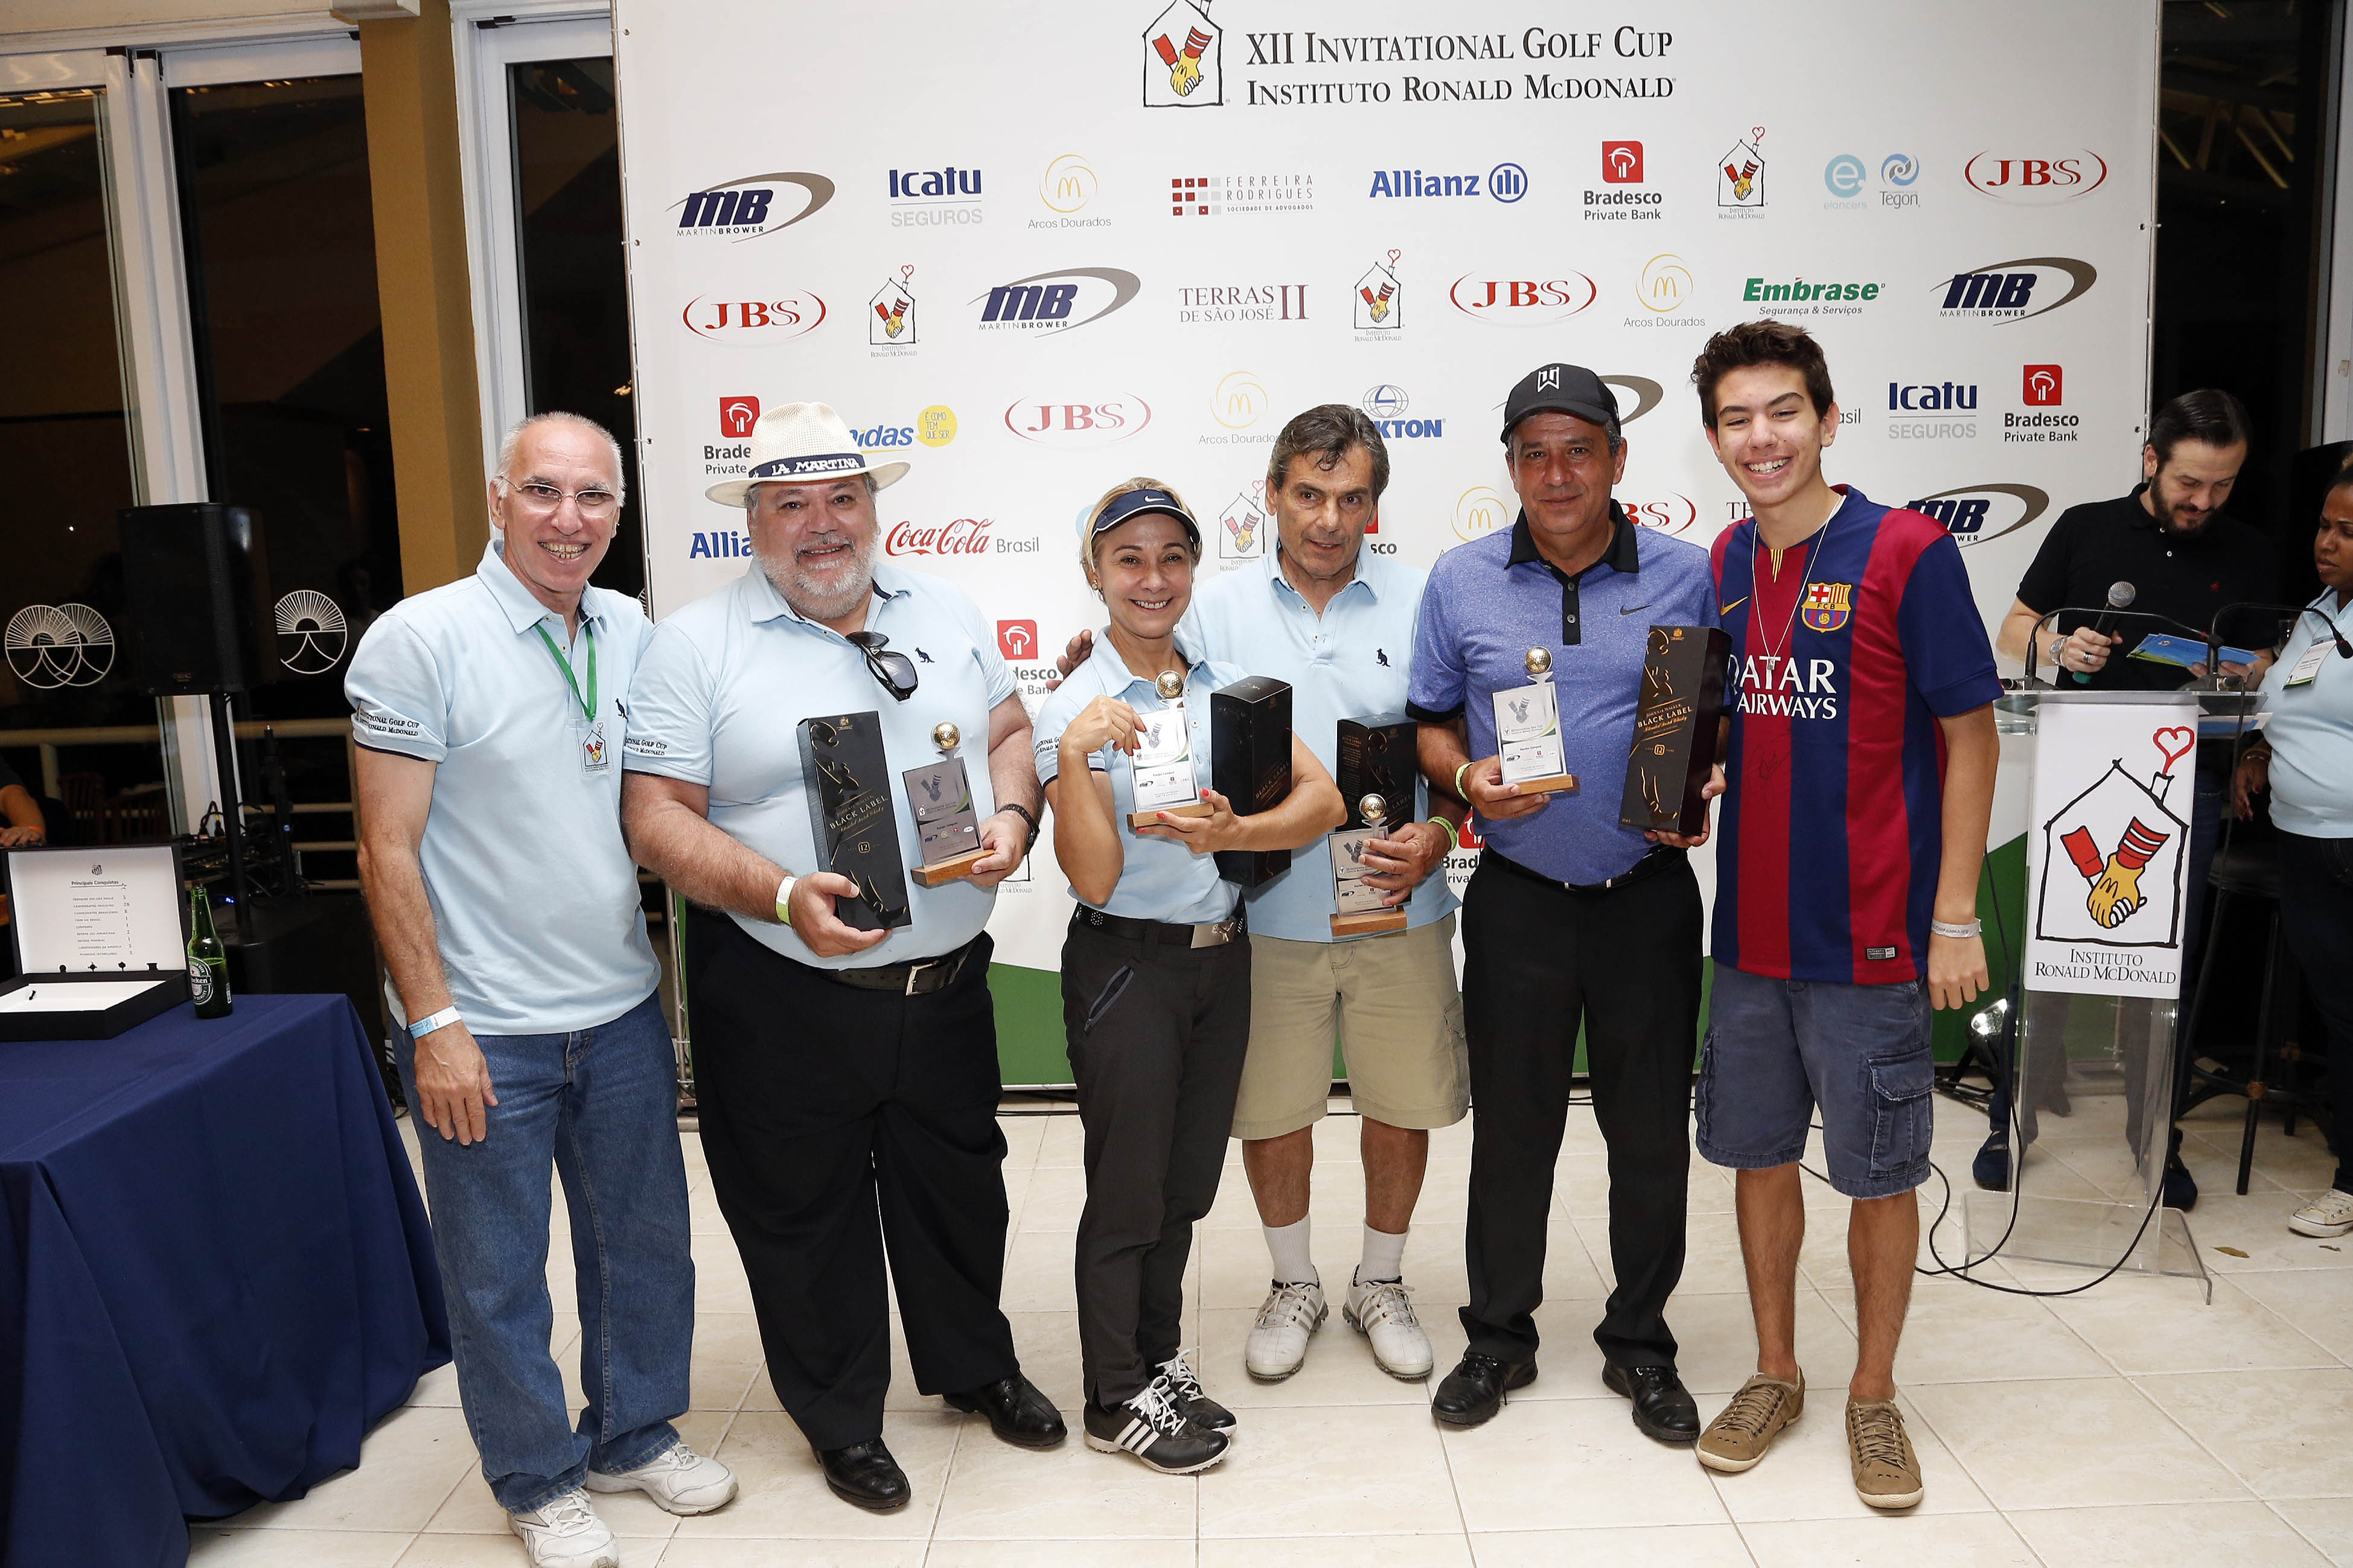 Campeões do 12º Invitational Golf Cup Instituto Ronald McDonald